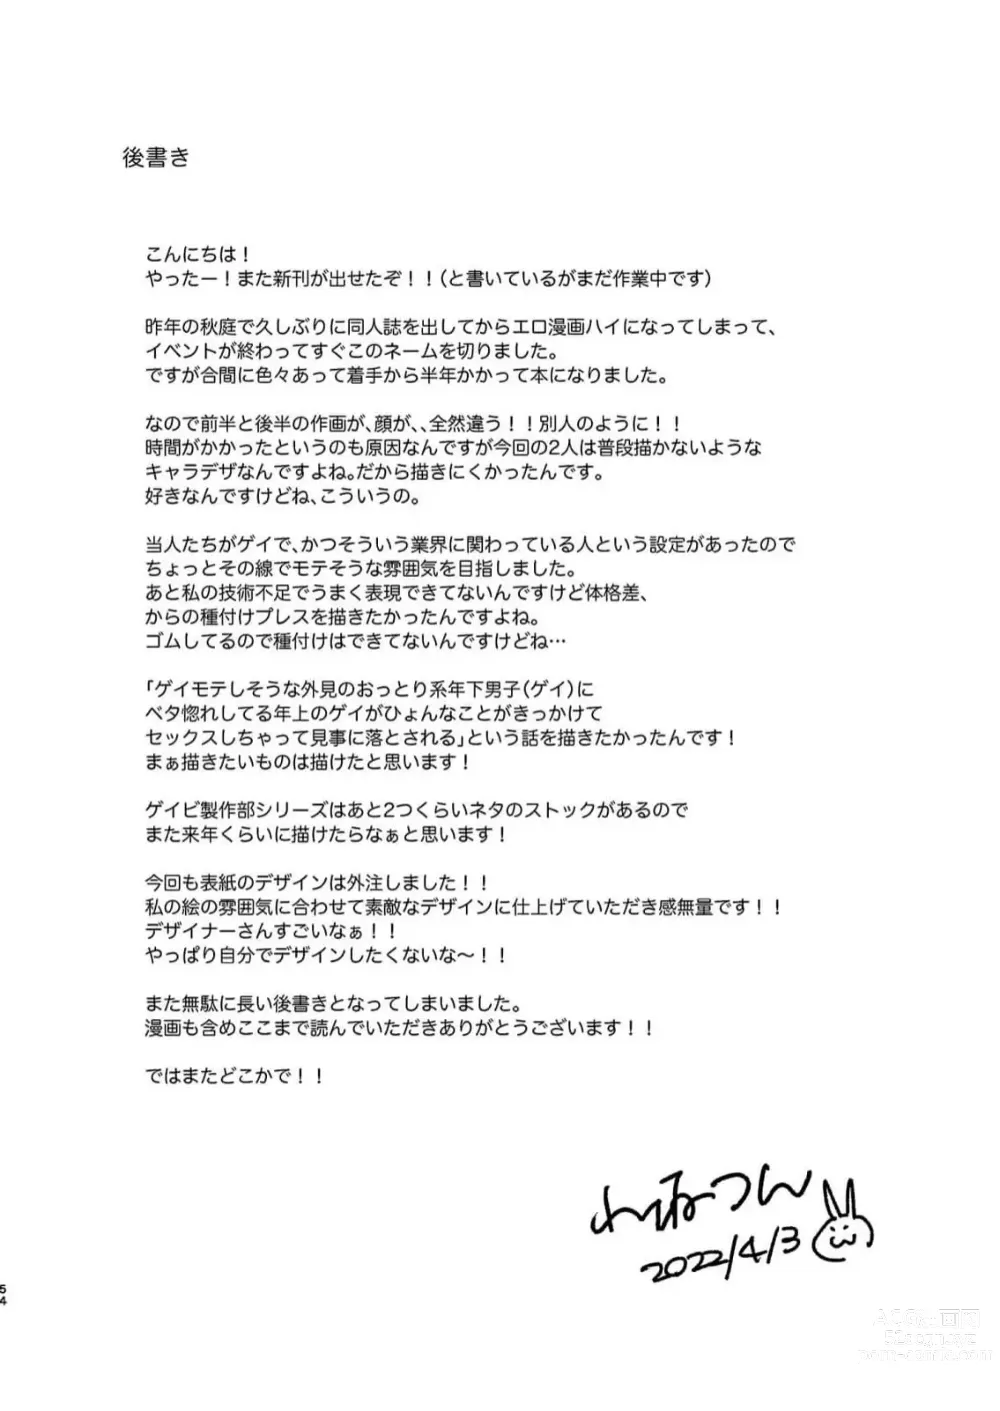 Page 54 of doujinshi Toaru GayVi Seisaku Gaisha Staff no Shanai Renai Jijou - The internal love affairs of the staff of a certain gay video production company.